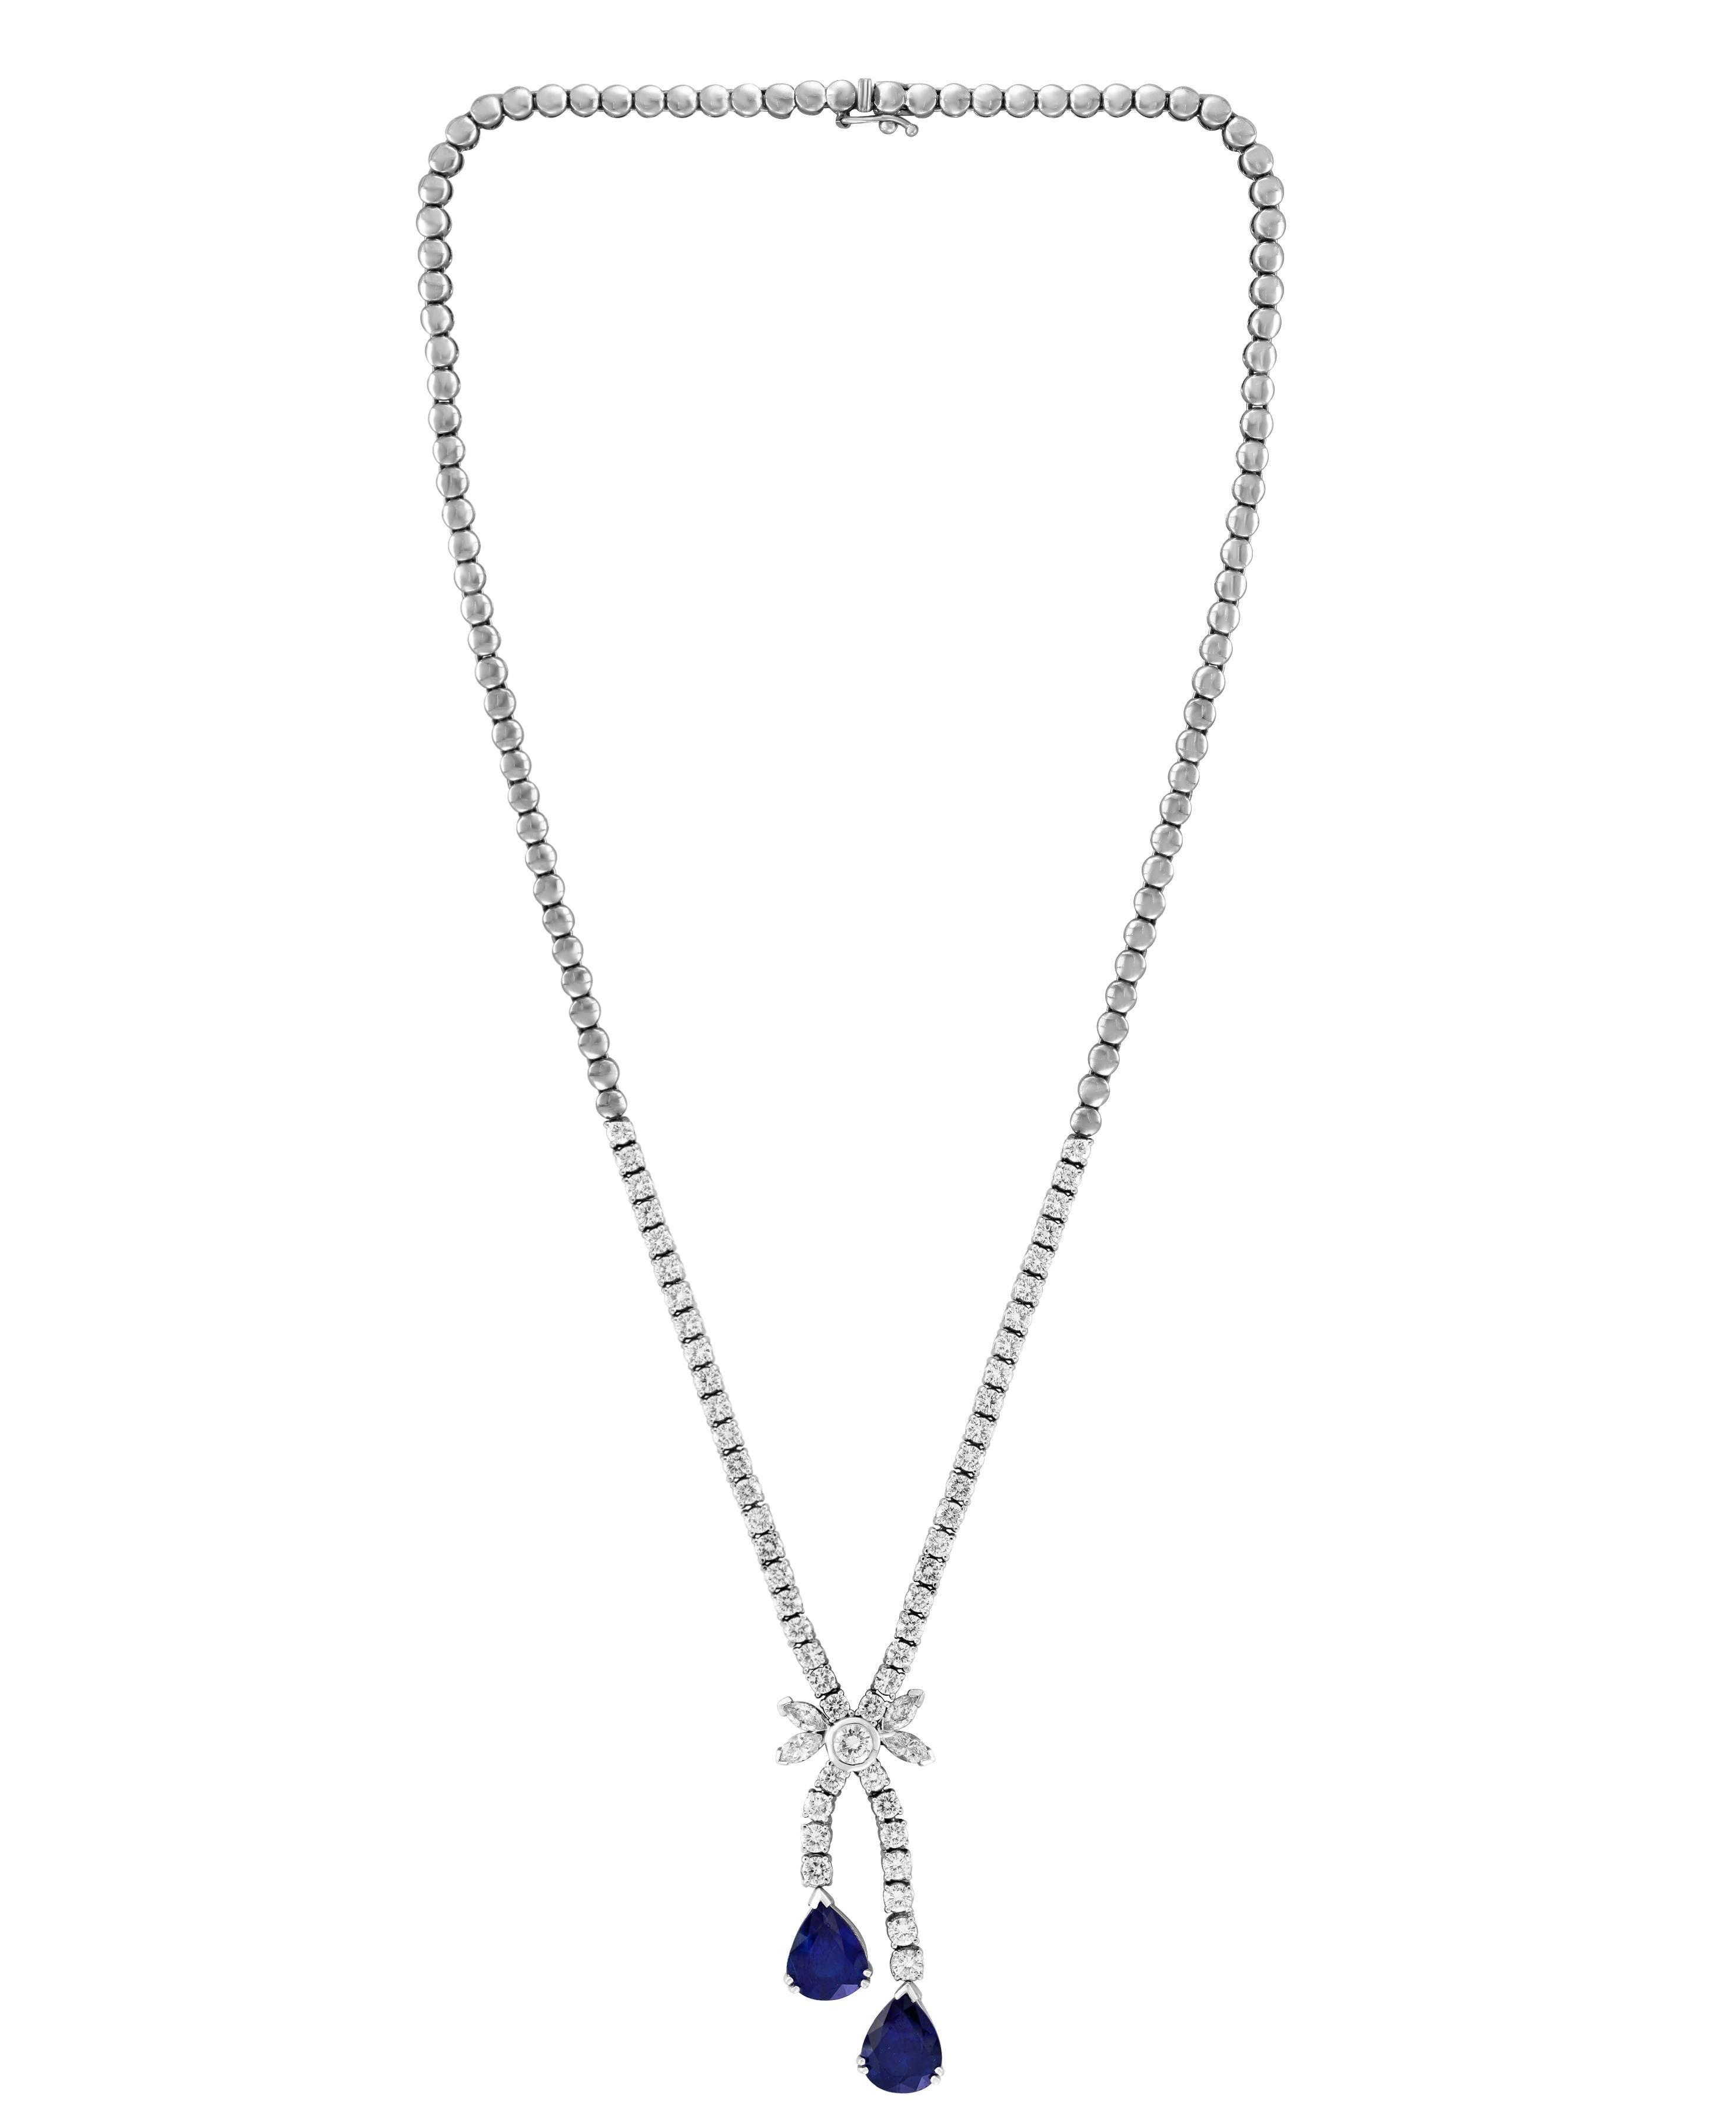 Women's Natural Blue Sapphire and Diamond Necklace 18 Karat White Gold, Estate